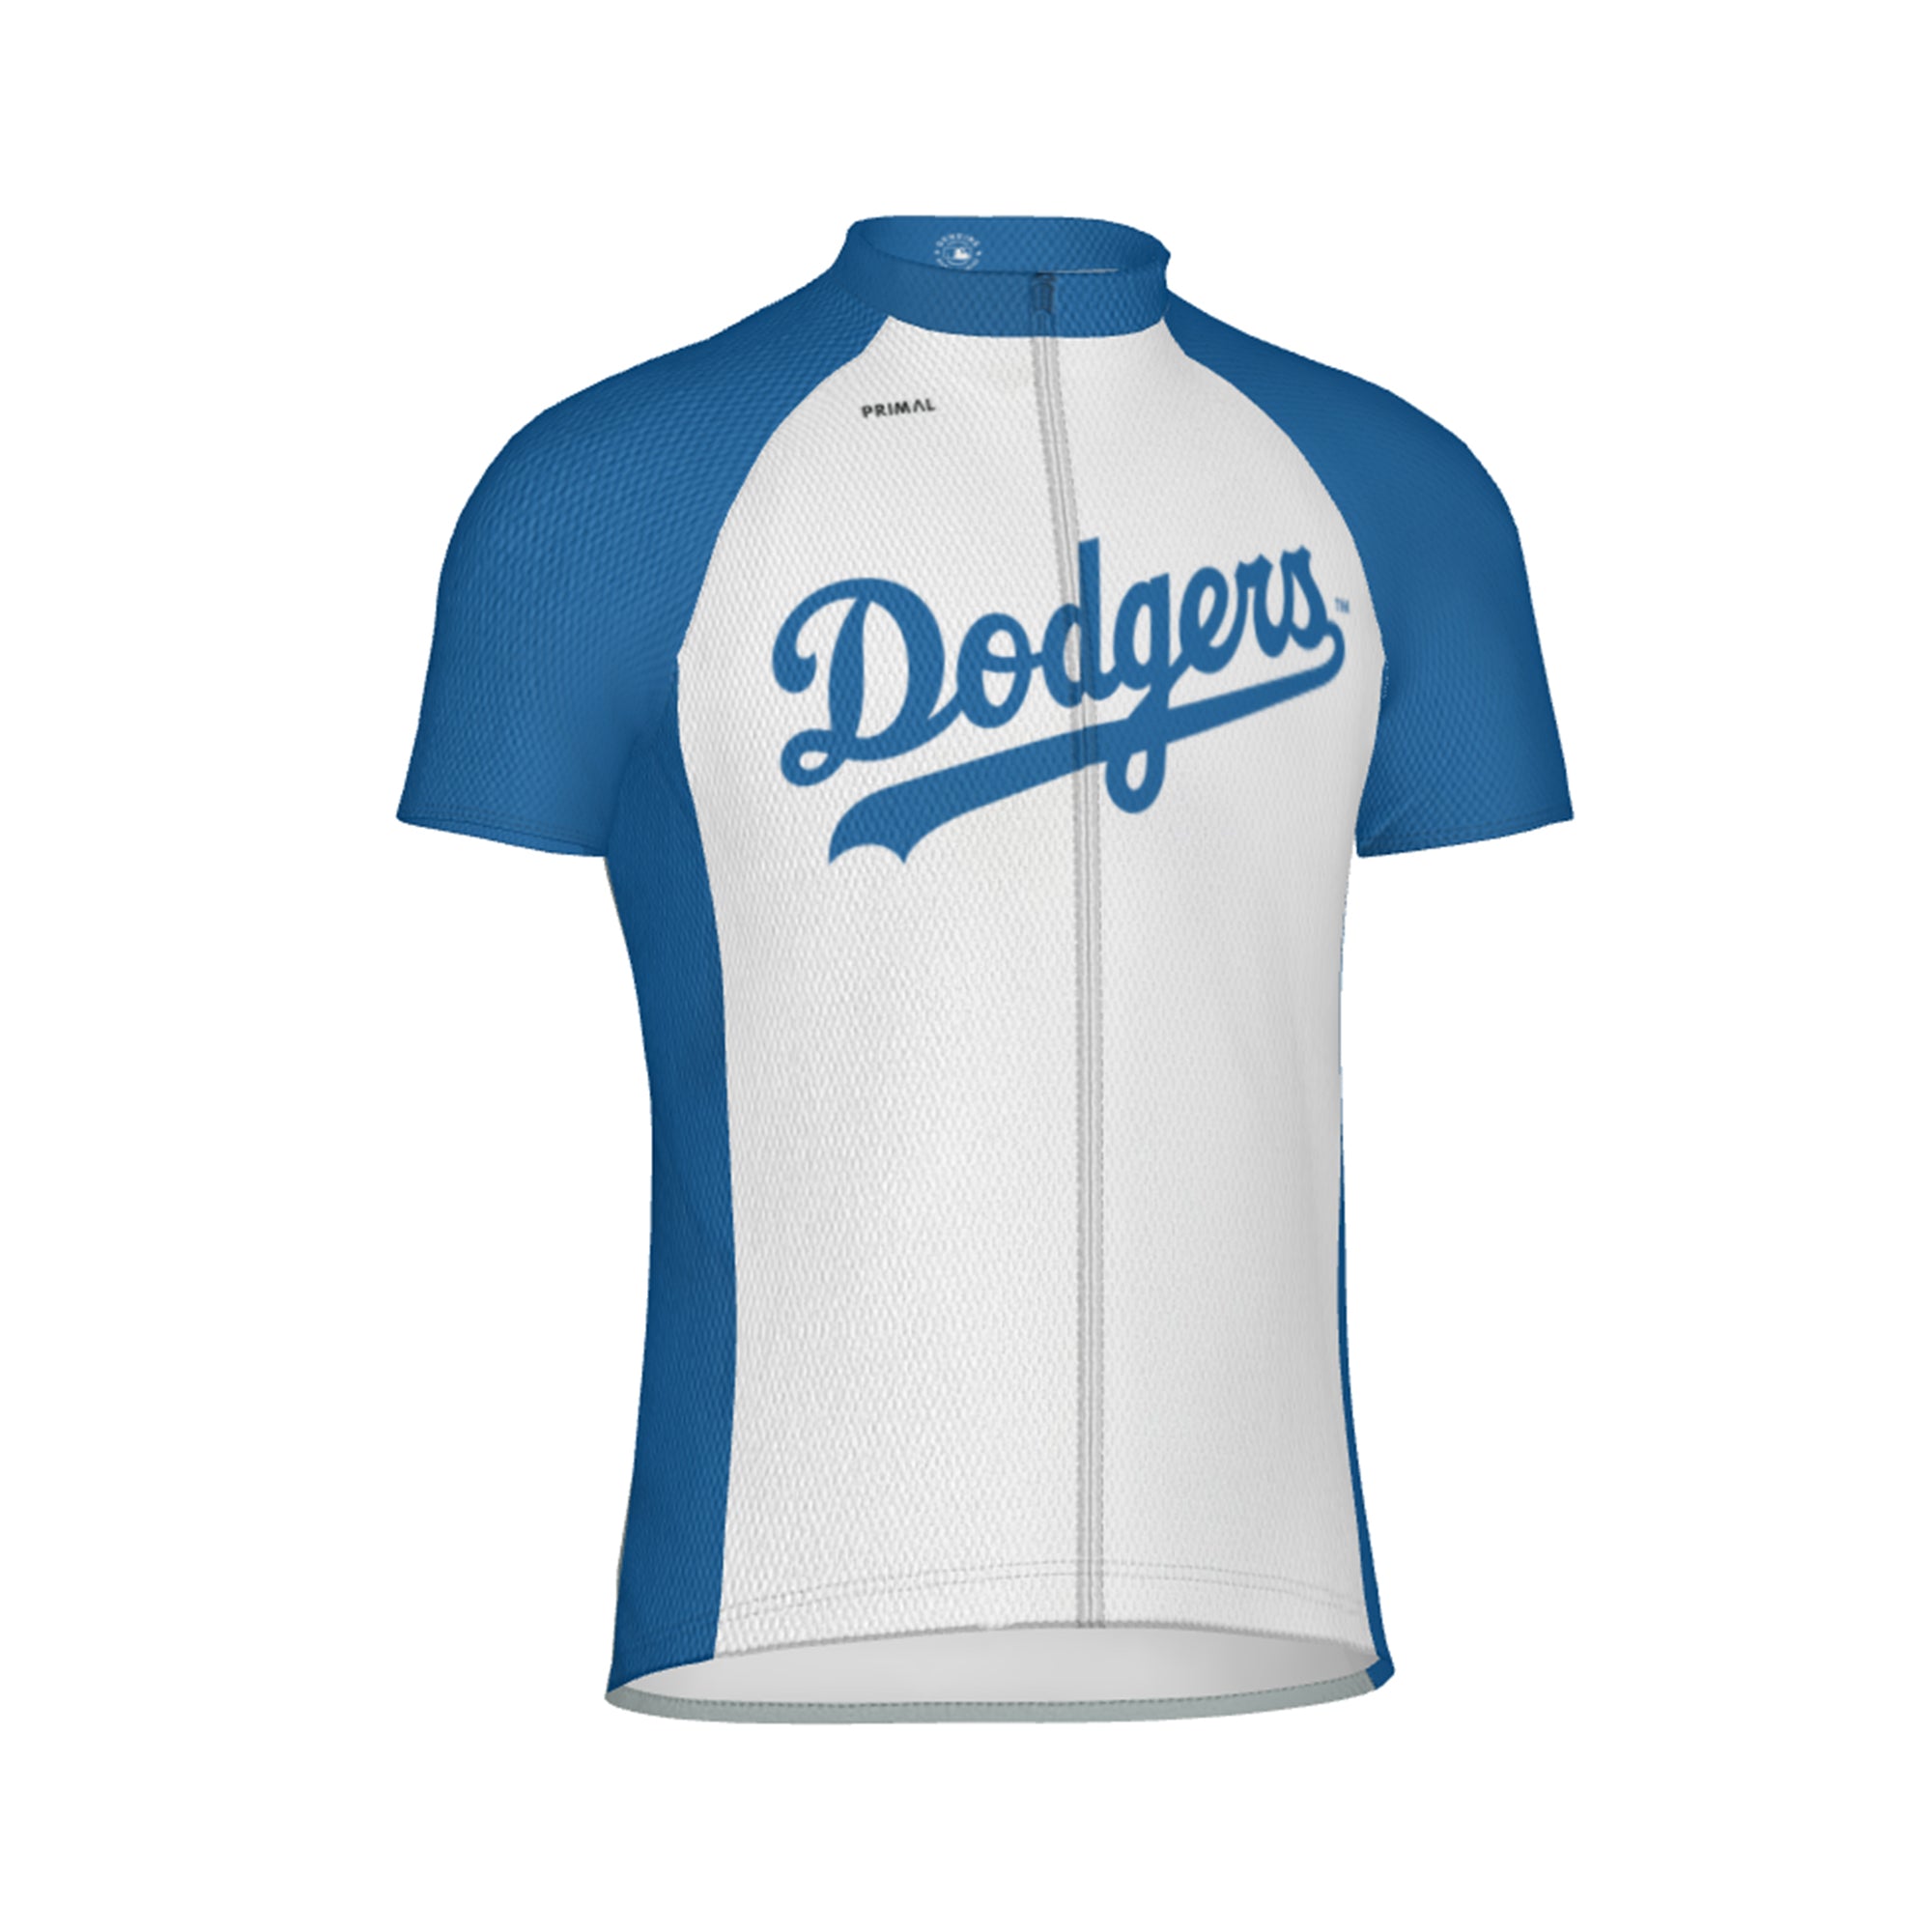 Custom Los Angeles Dodgers Jerseys, Customized Dodgers Shirts, Hoodies,  Merchandise